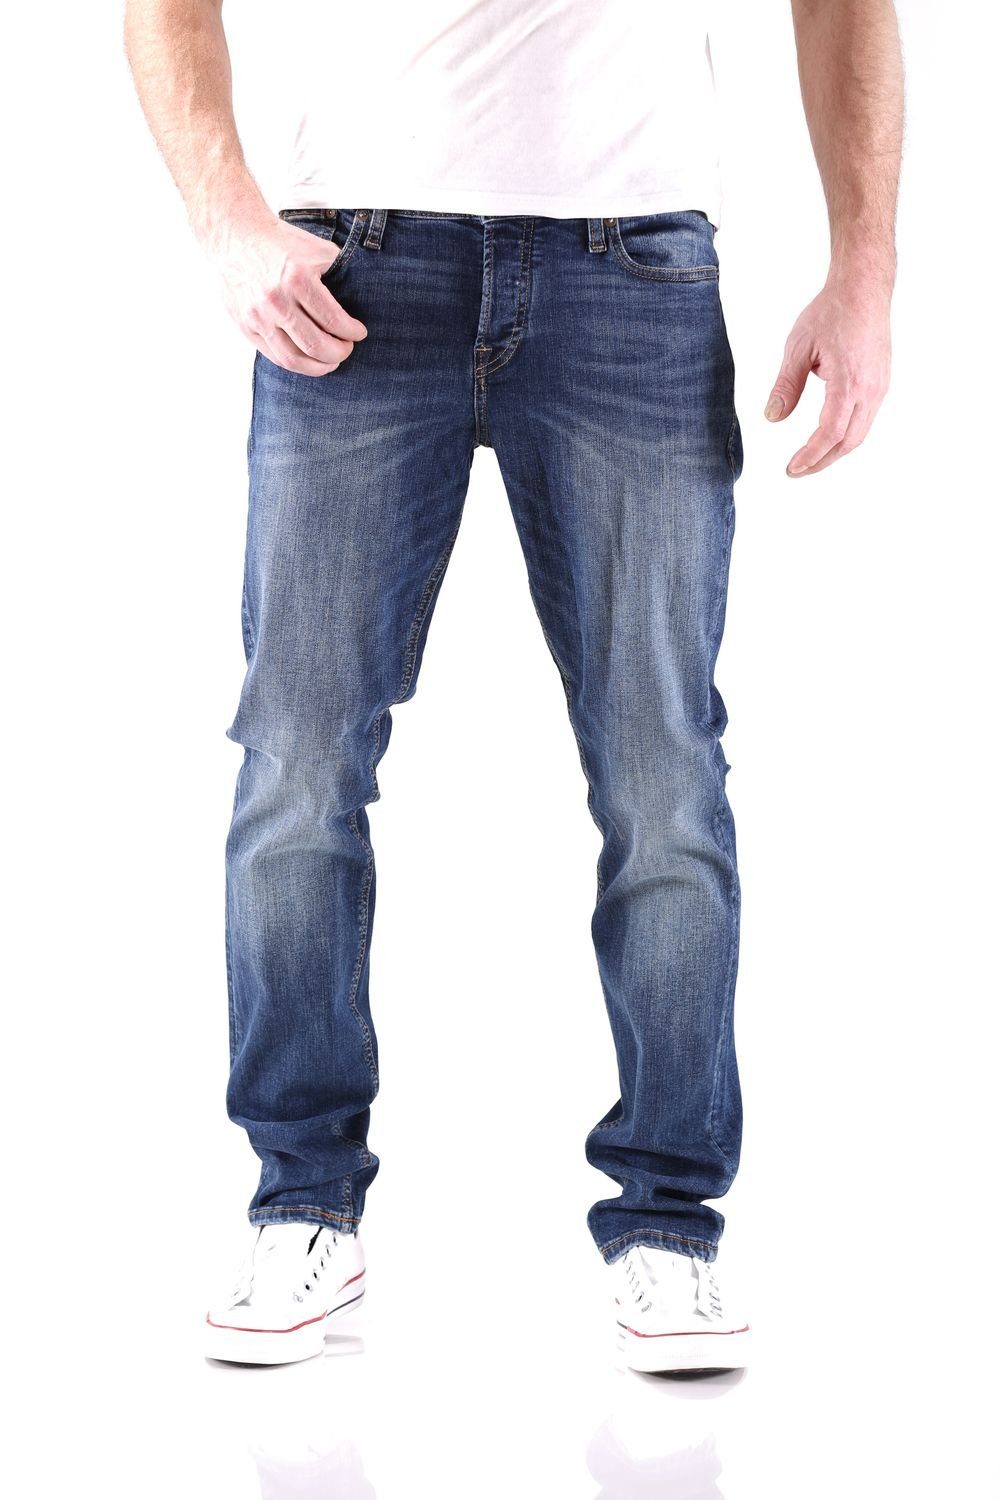 & (AGI Fit Jones Herren Jack Jeans 005) Slim-fit-Jeans Jack Glenn Jones & Original Slim Blau